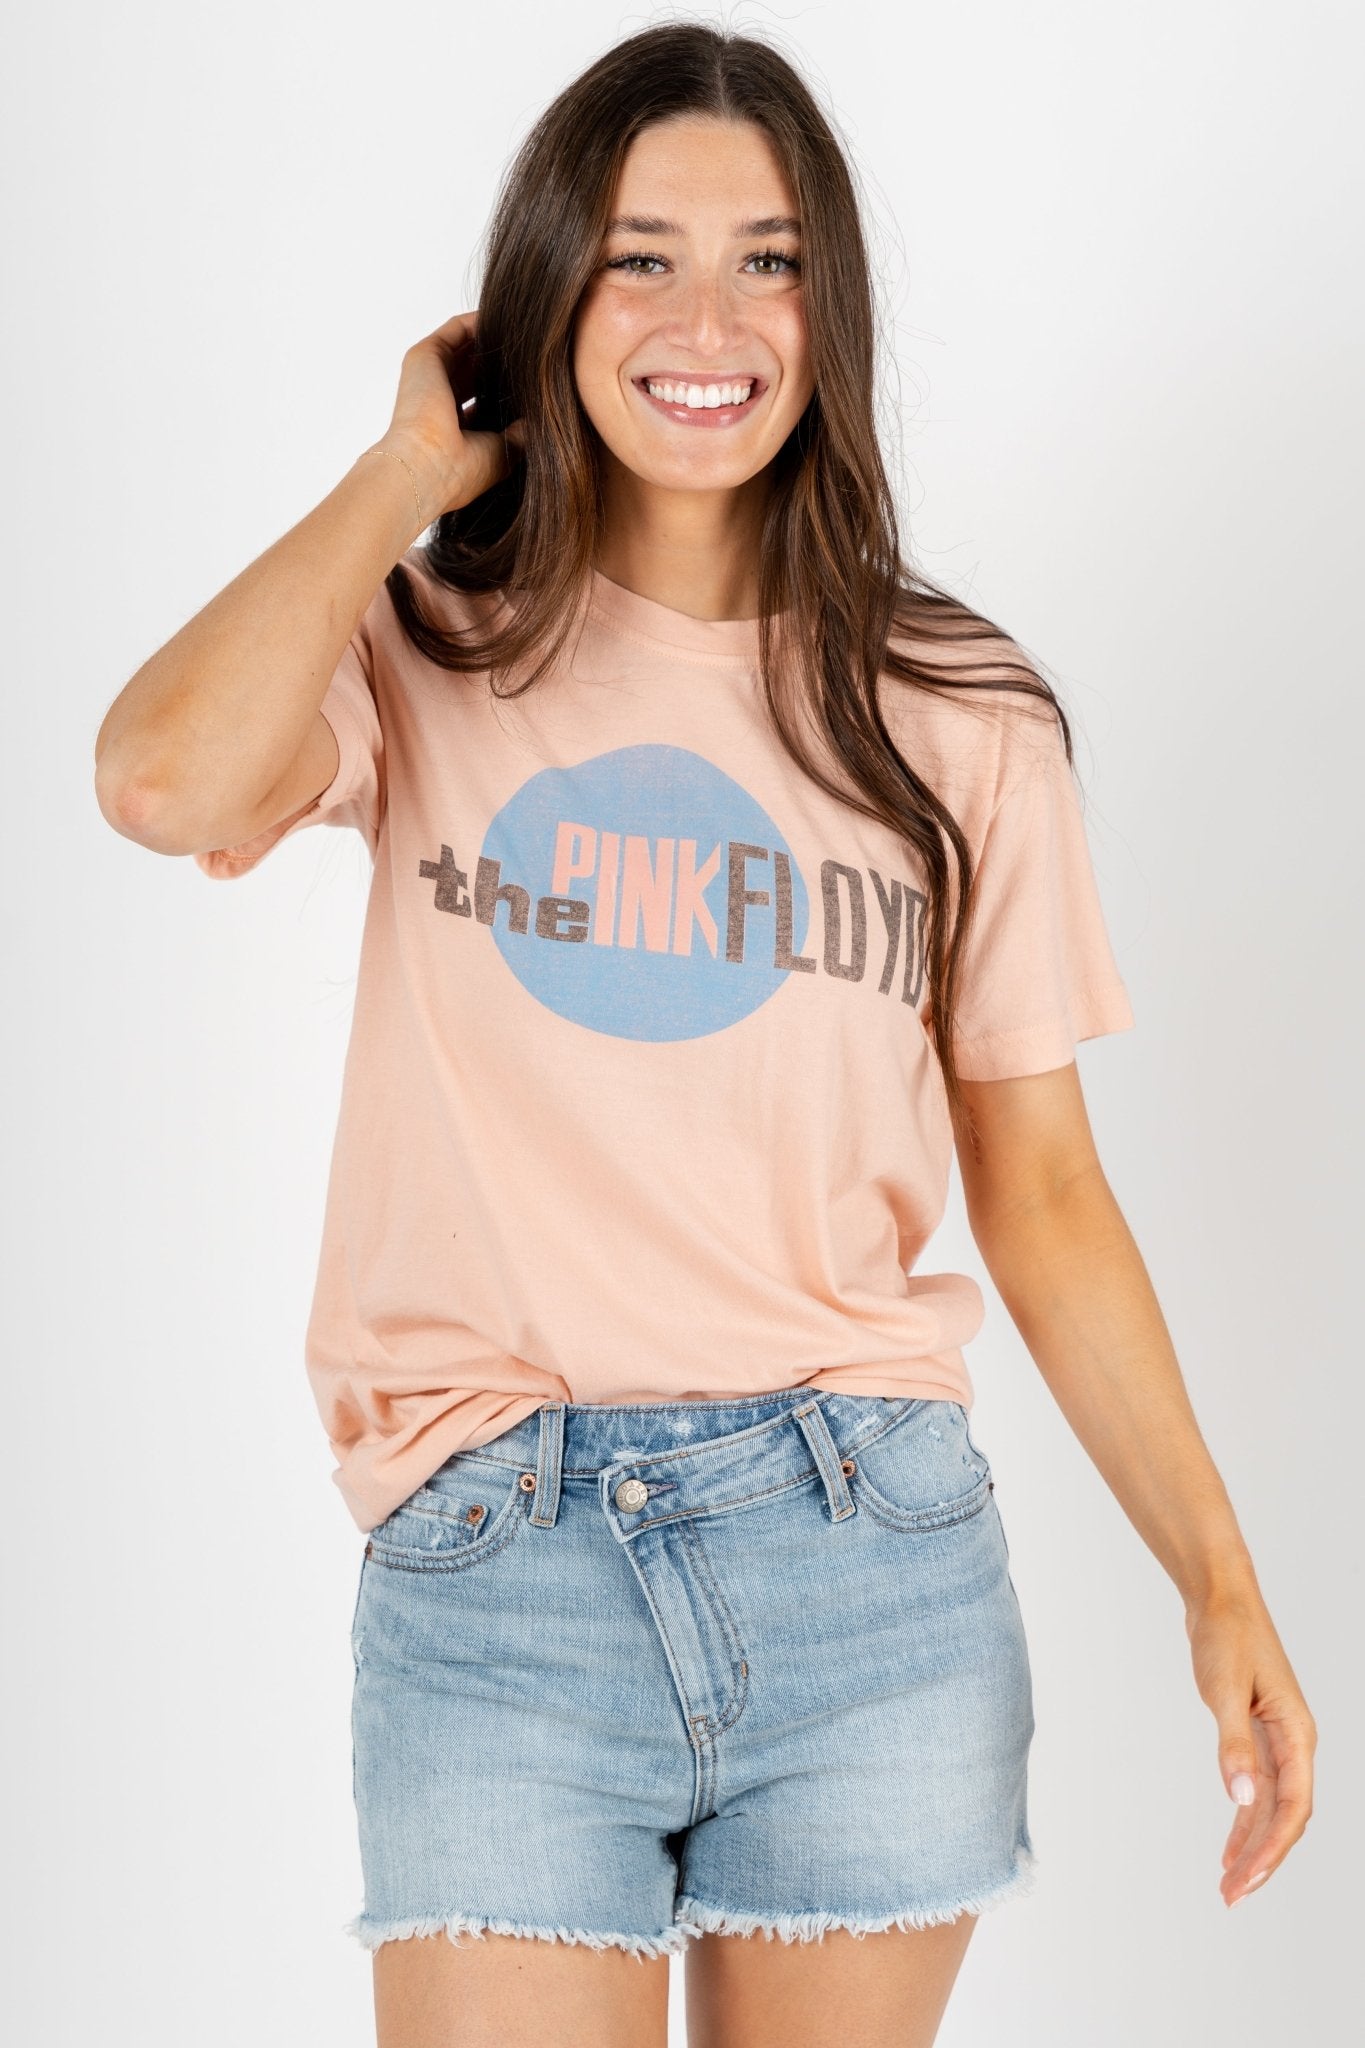 Pink Floyd vintage fade t-shirt blush - Stylish Band T-Shirts and Sweatshirts at Lush Fashion Lounge Boutique in Oklahoma City